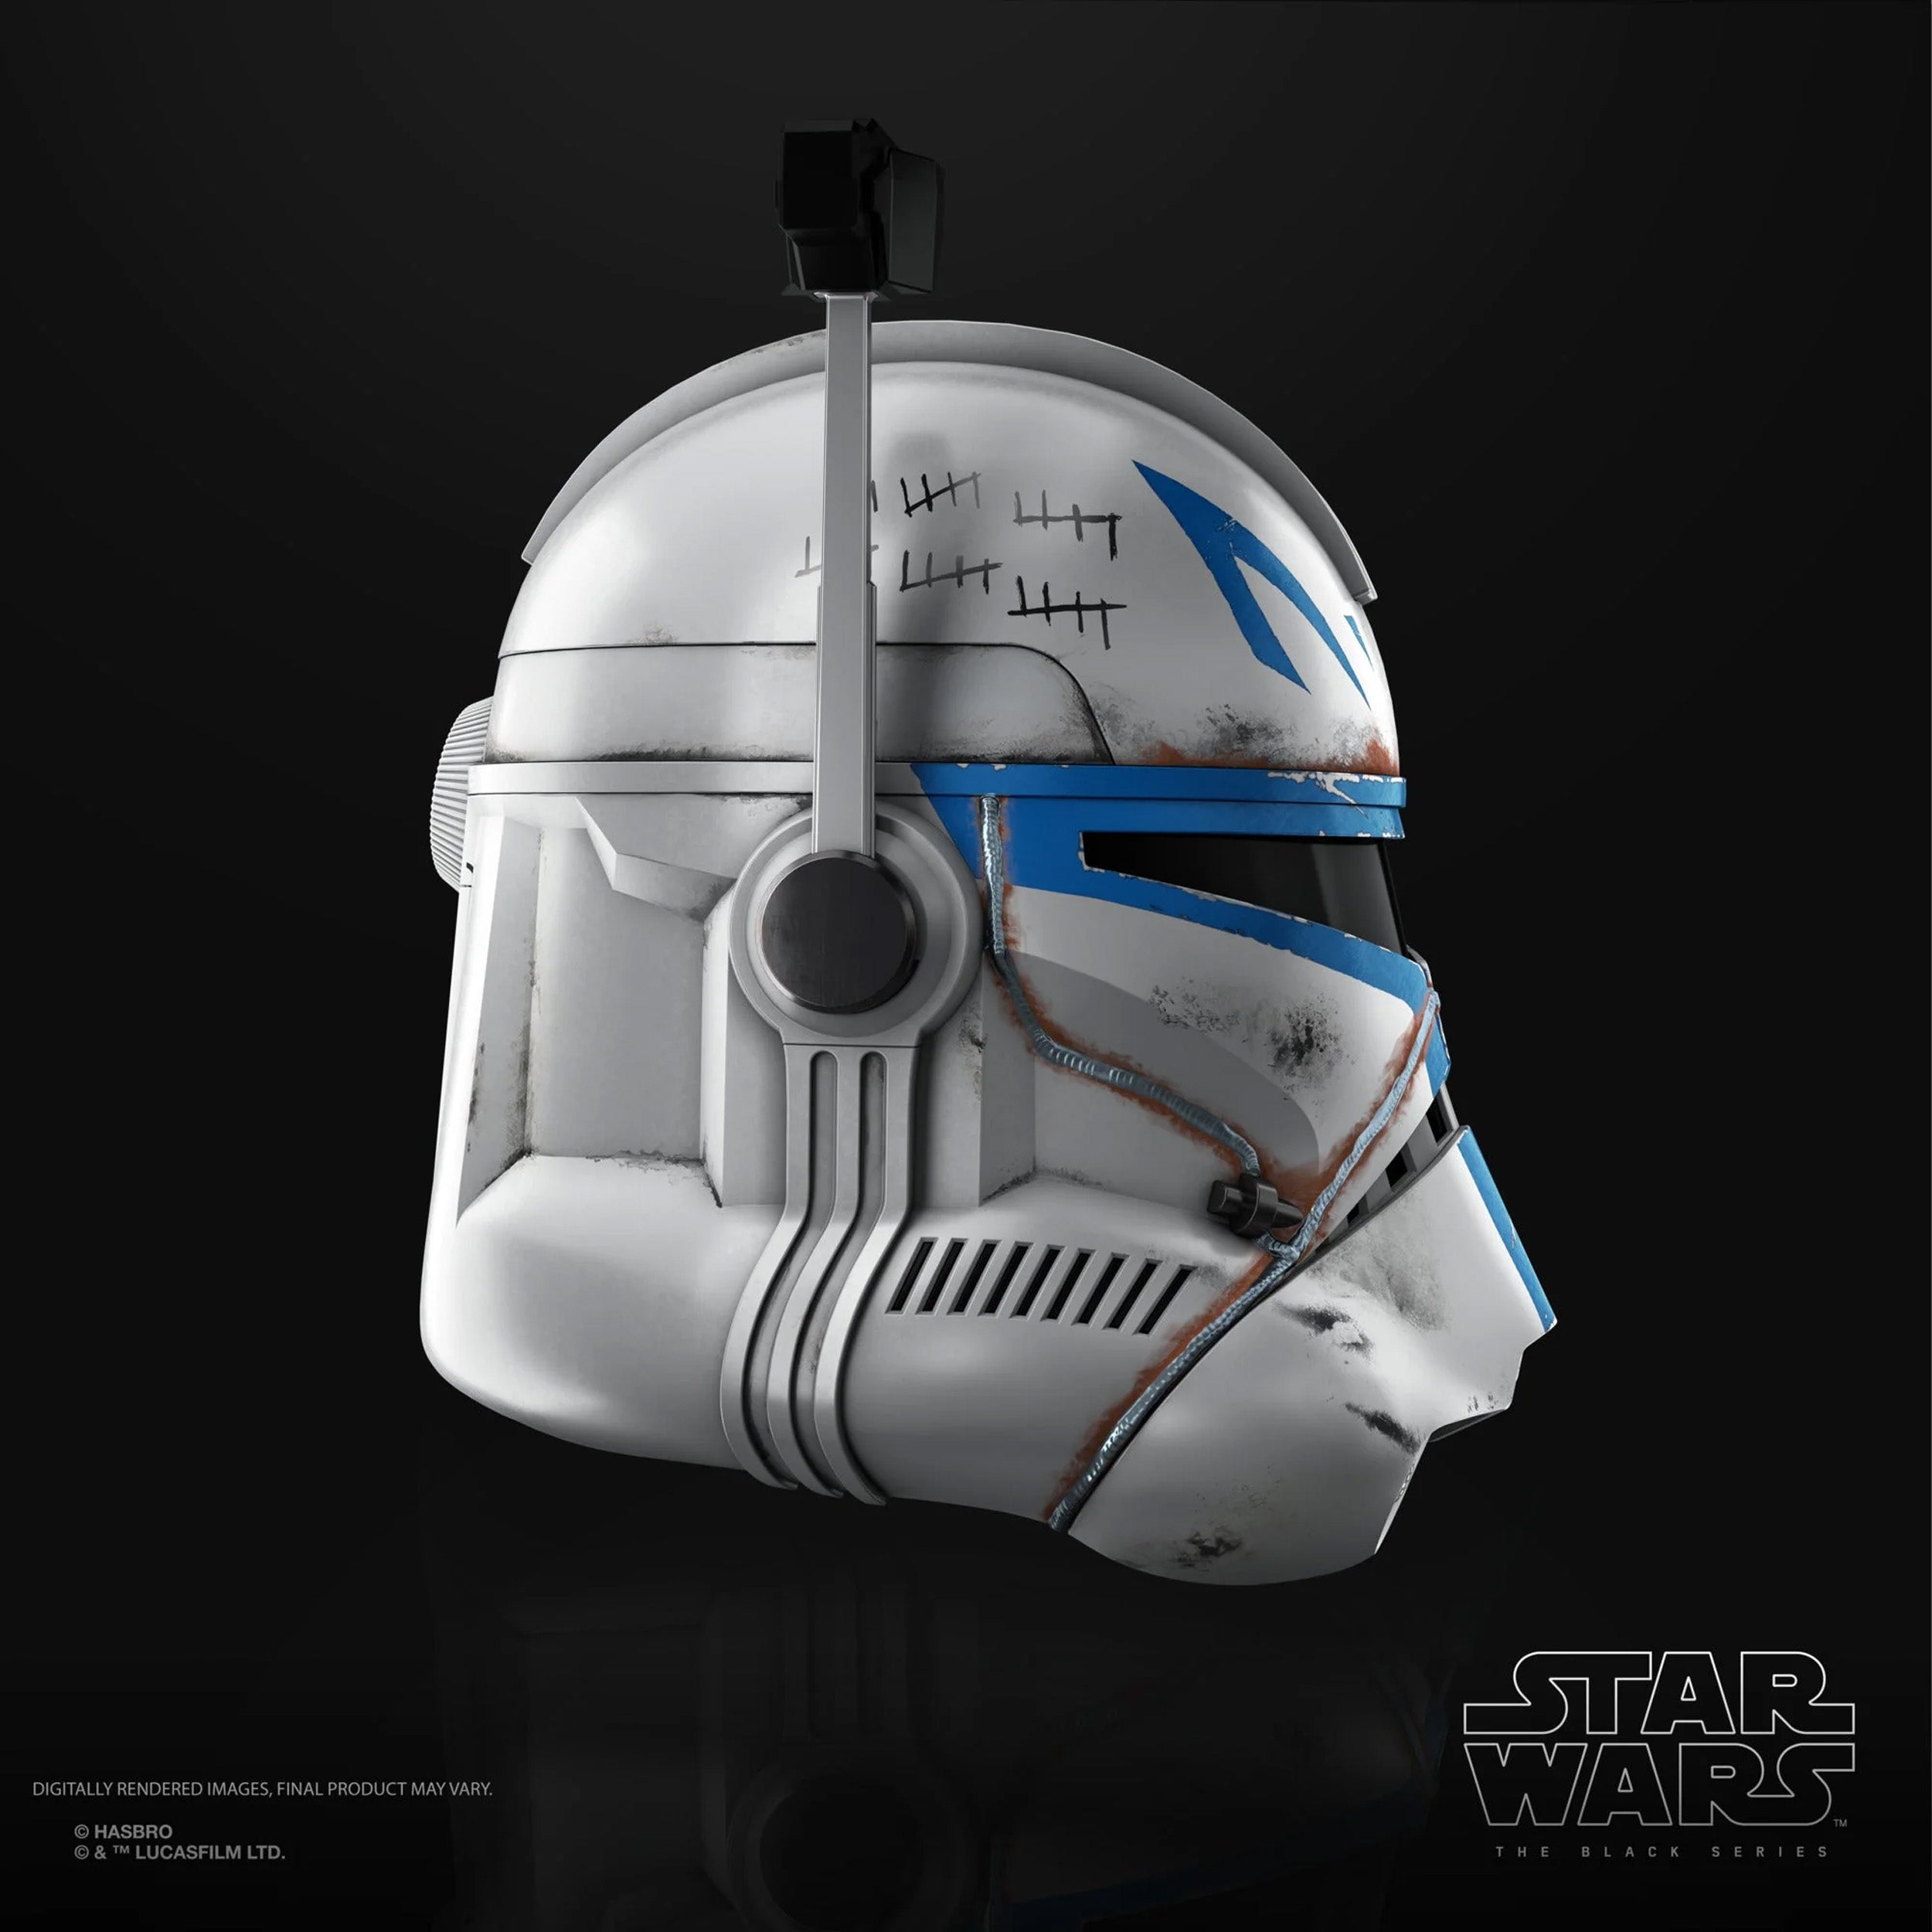 Hasbro - Star Wars: The Black Series - Ahsoka - Clone Captain Rex Helmet (1/1 Scale) - Marvelous Toys